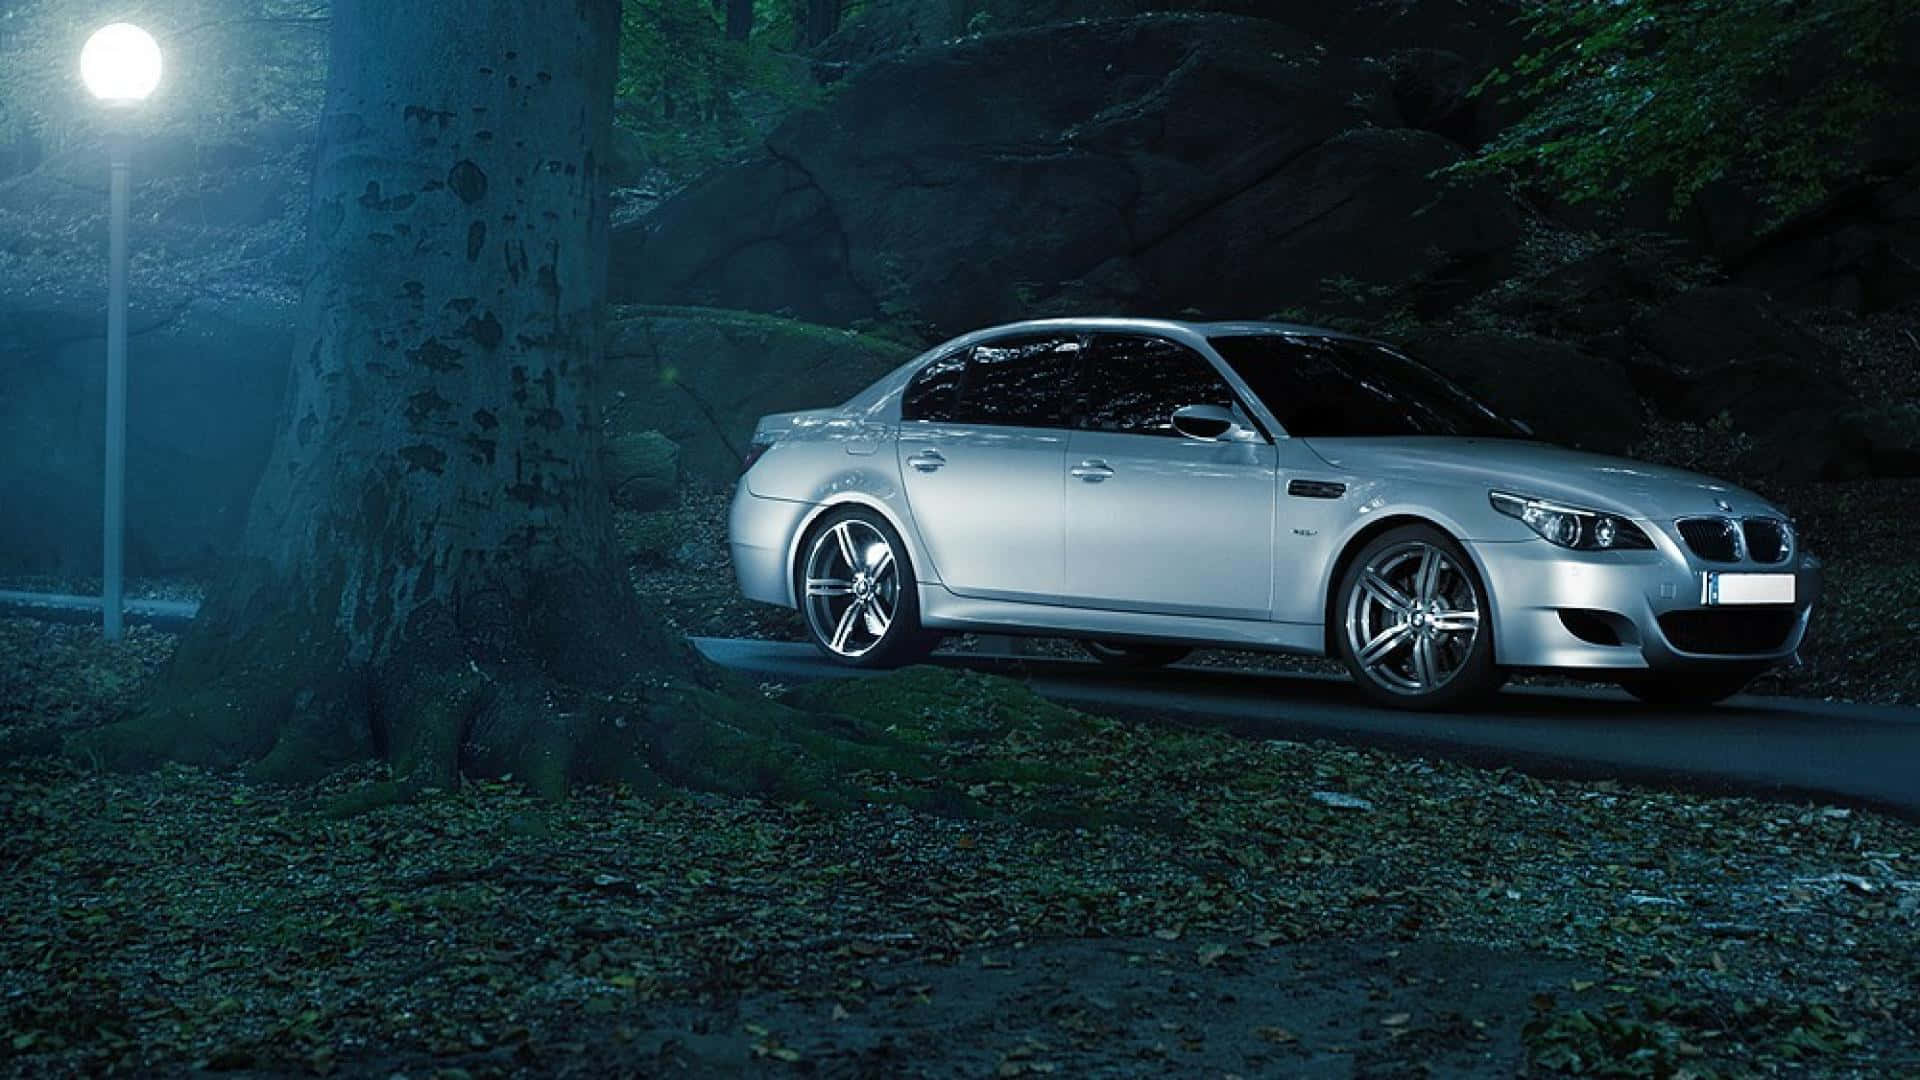 Sleek BMW M5 Sport Sedan in Action Wallpaper